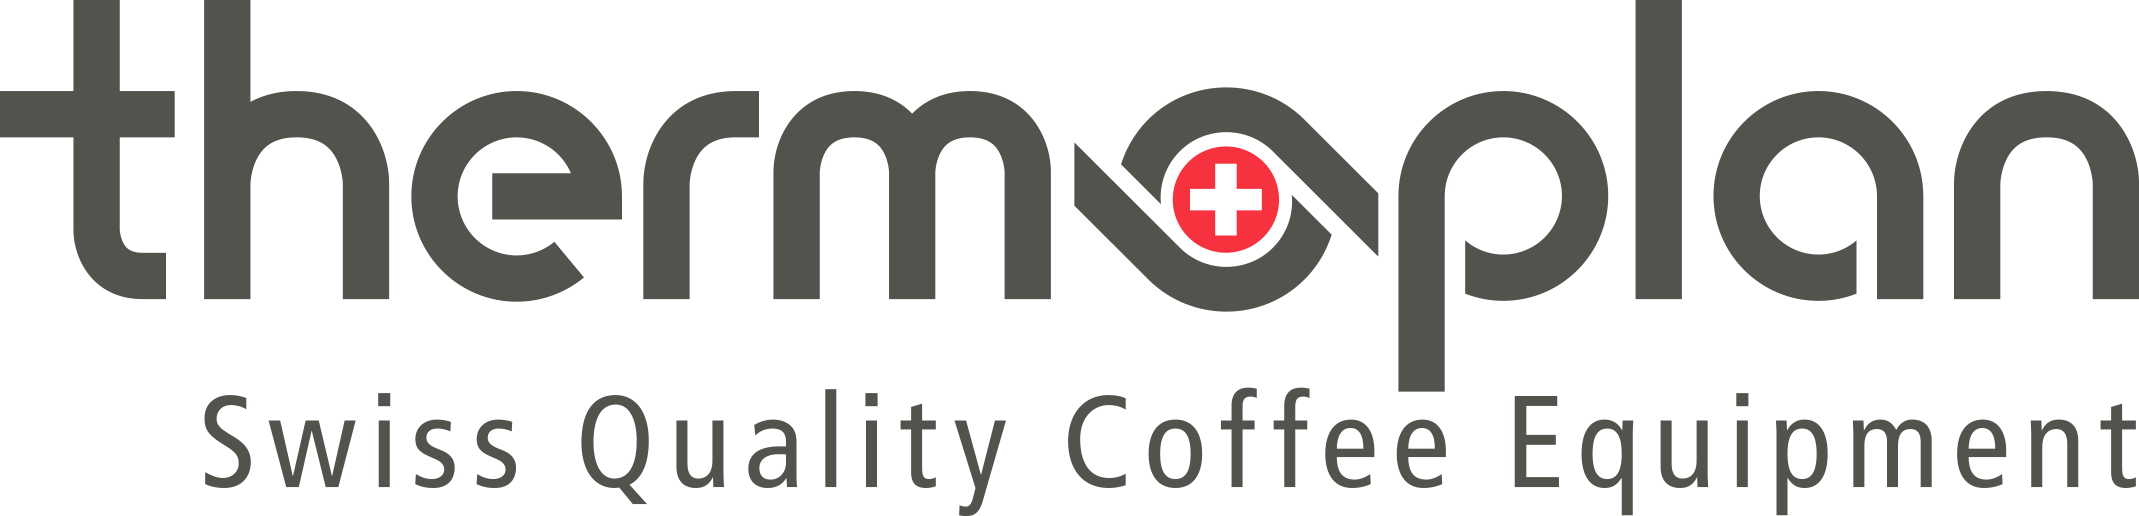 thermoplan Swiss Quality Coffee Equipment